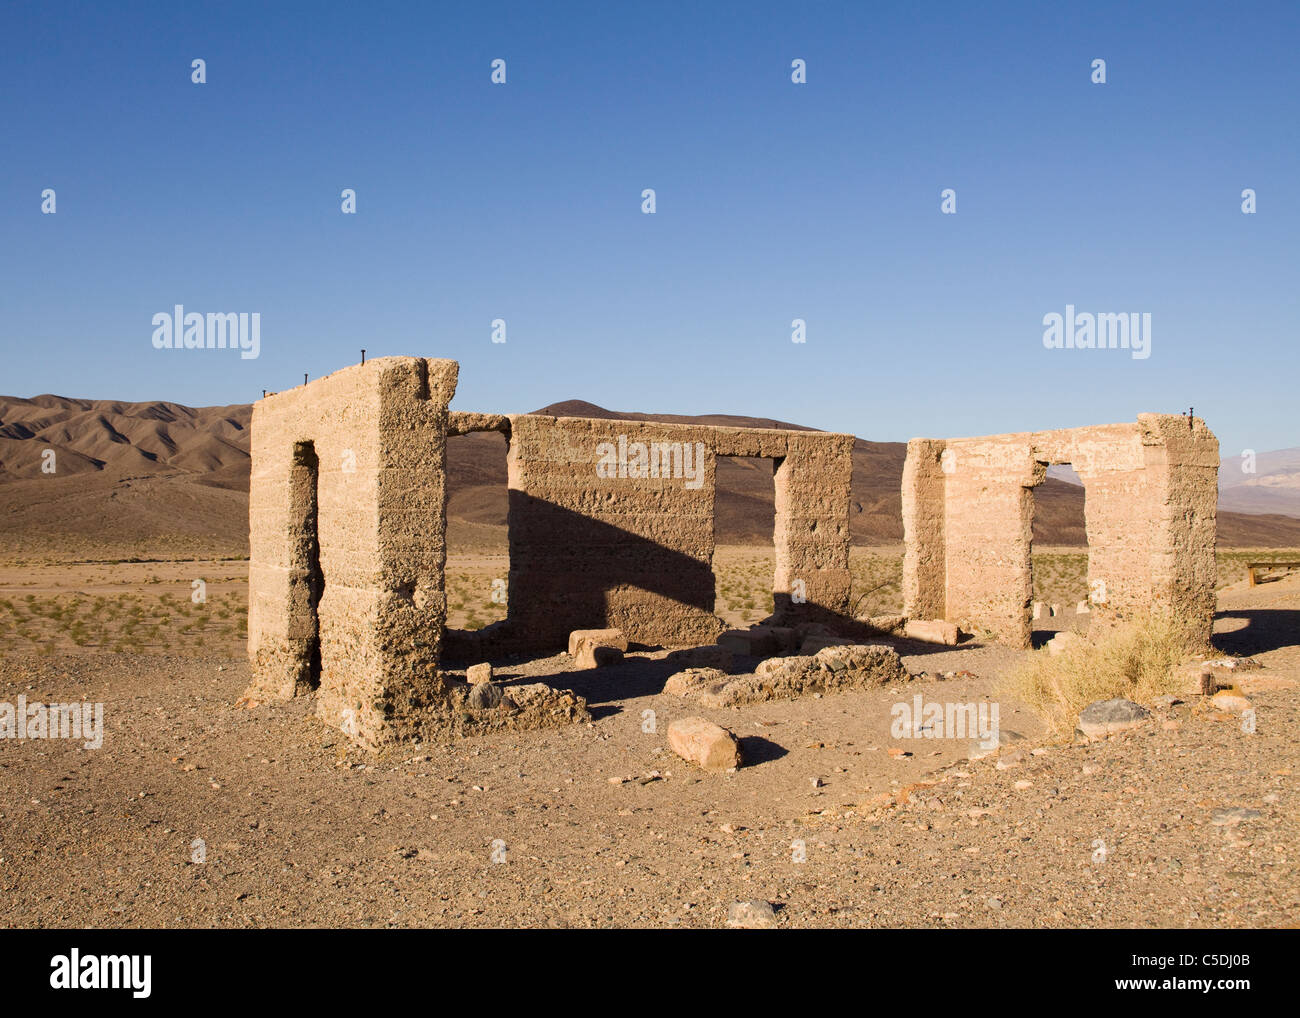 An old desert ruin - Mojave desert, California USA Stock Photo